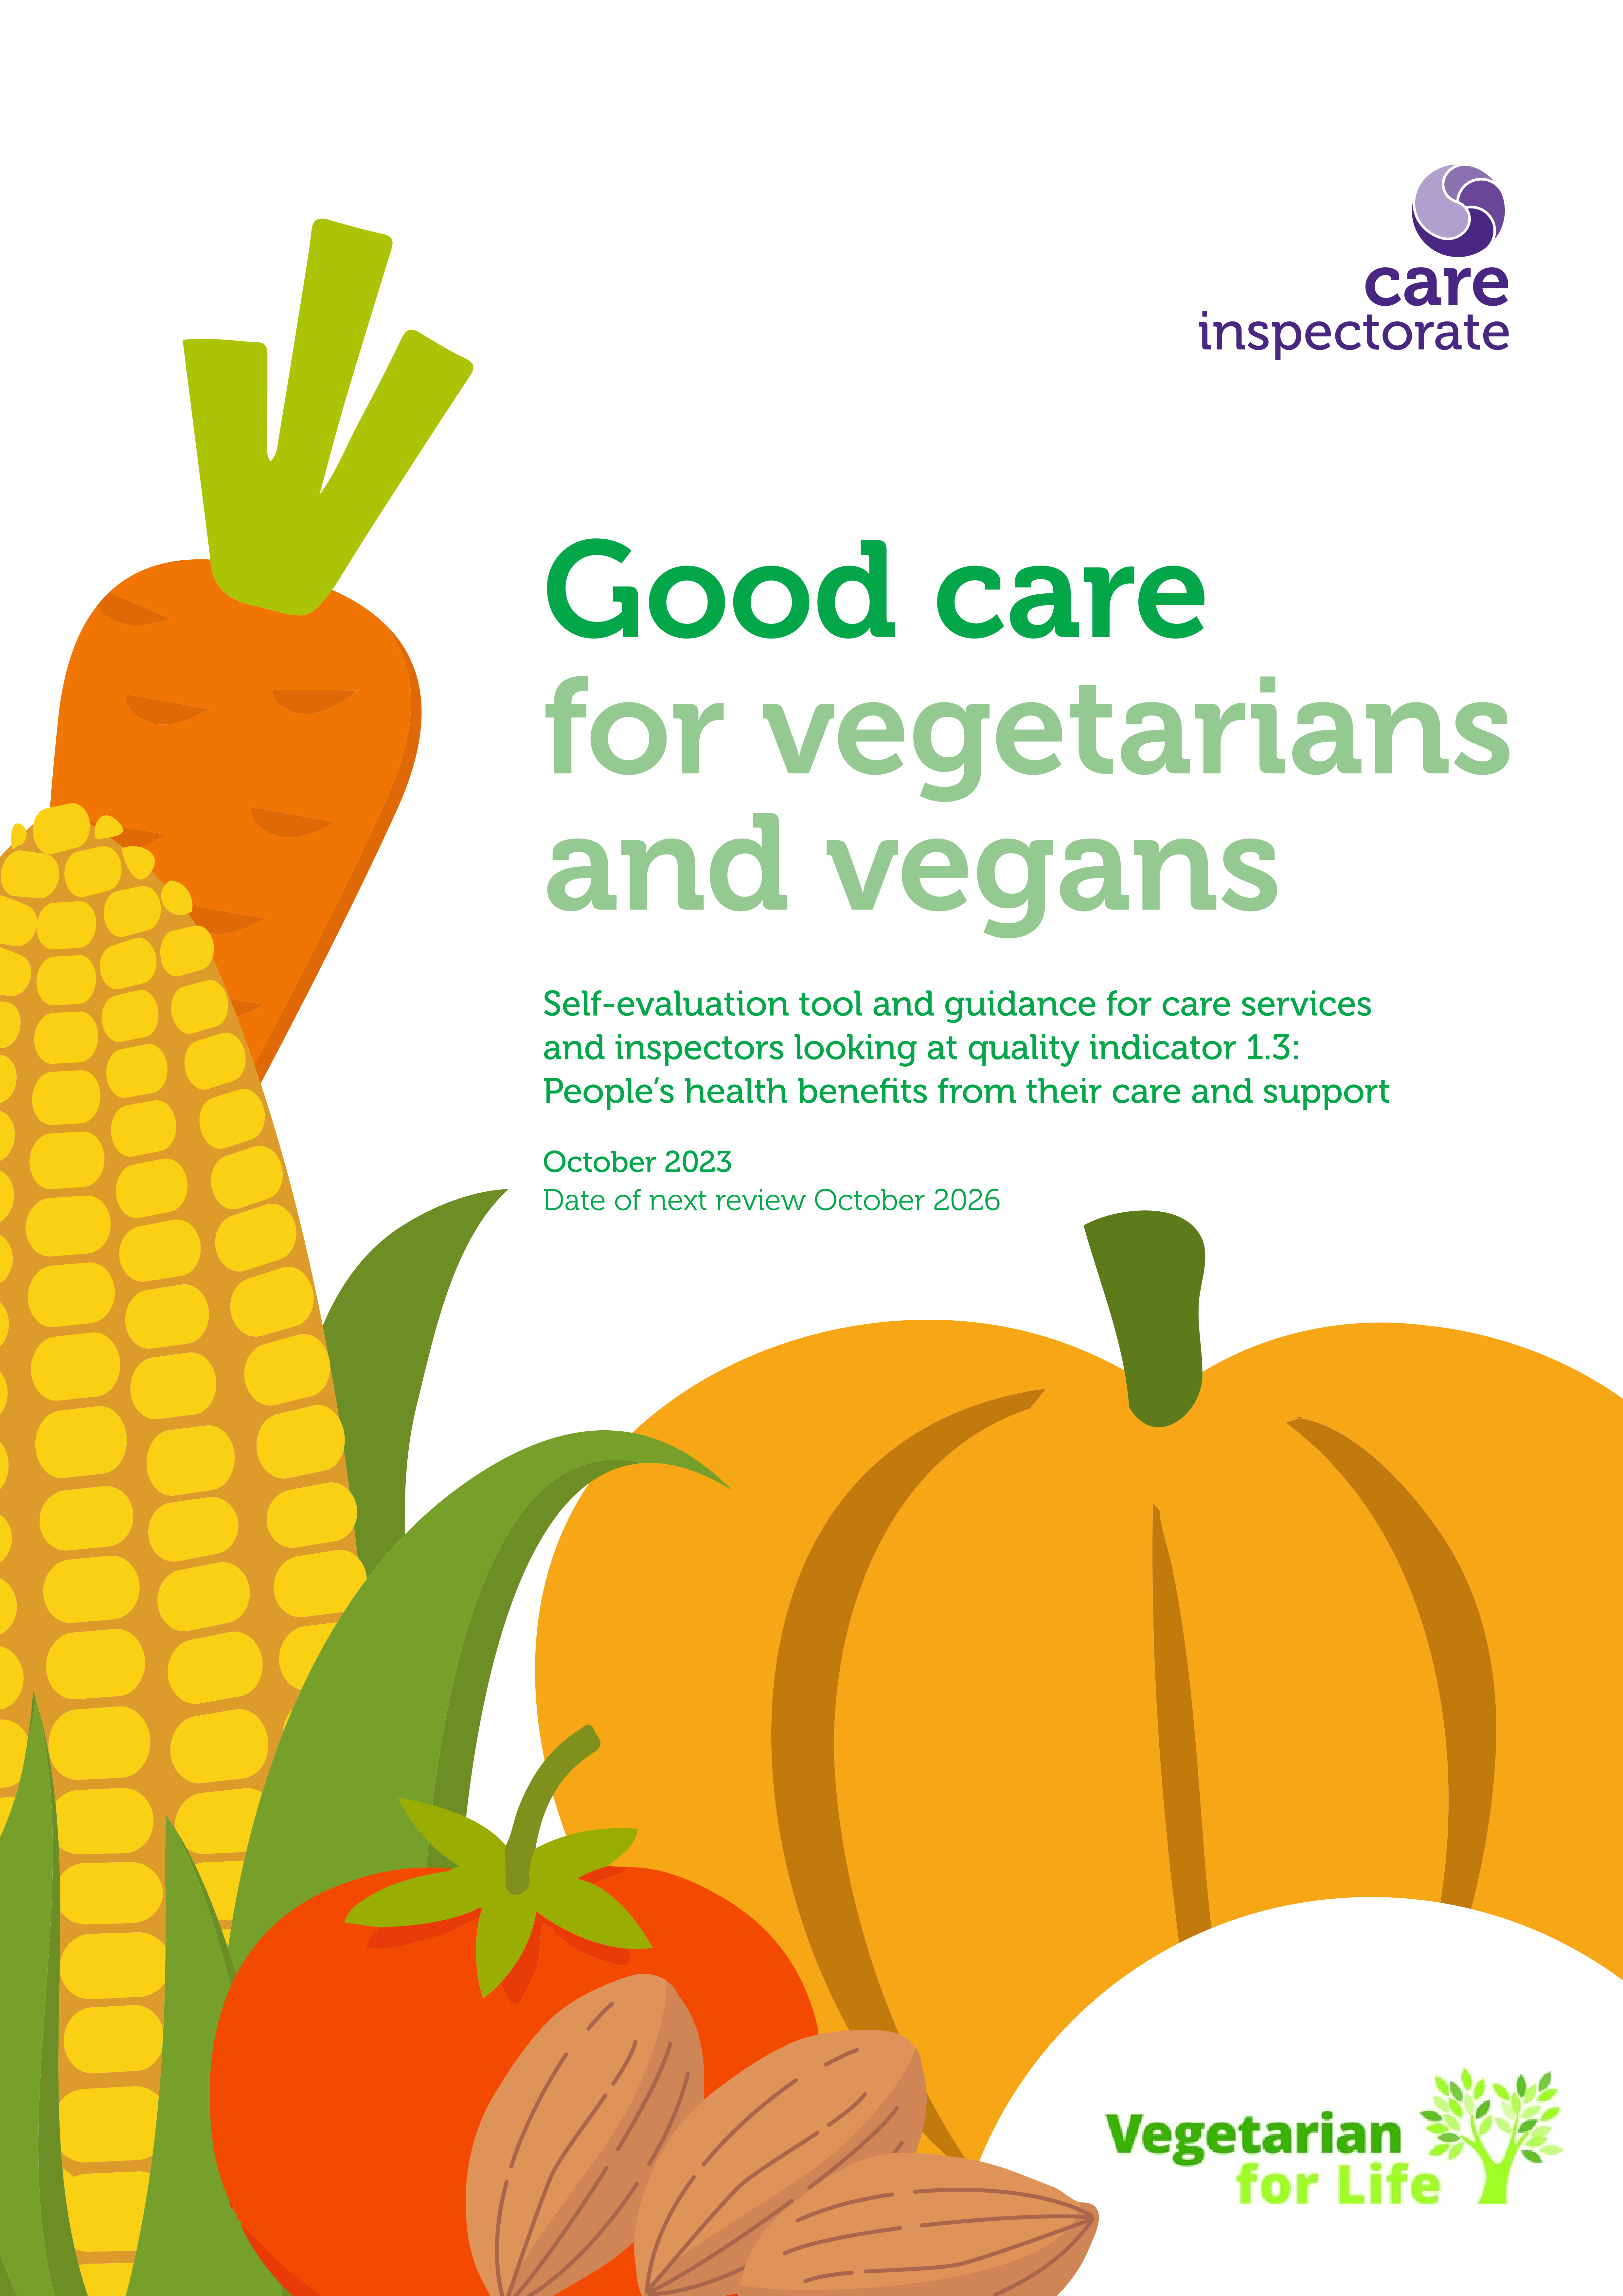 Good care for vegans and vegetarians